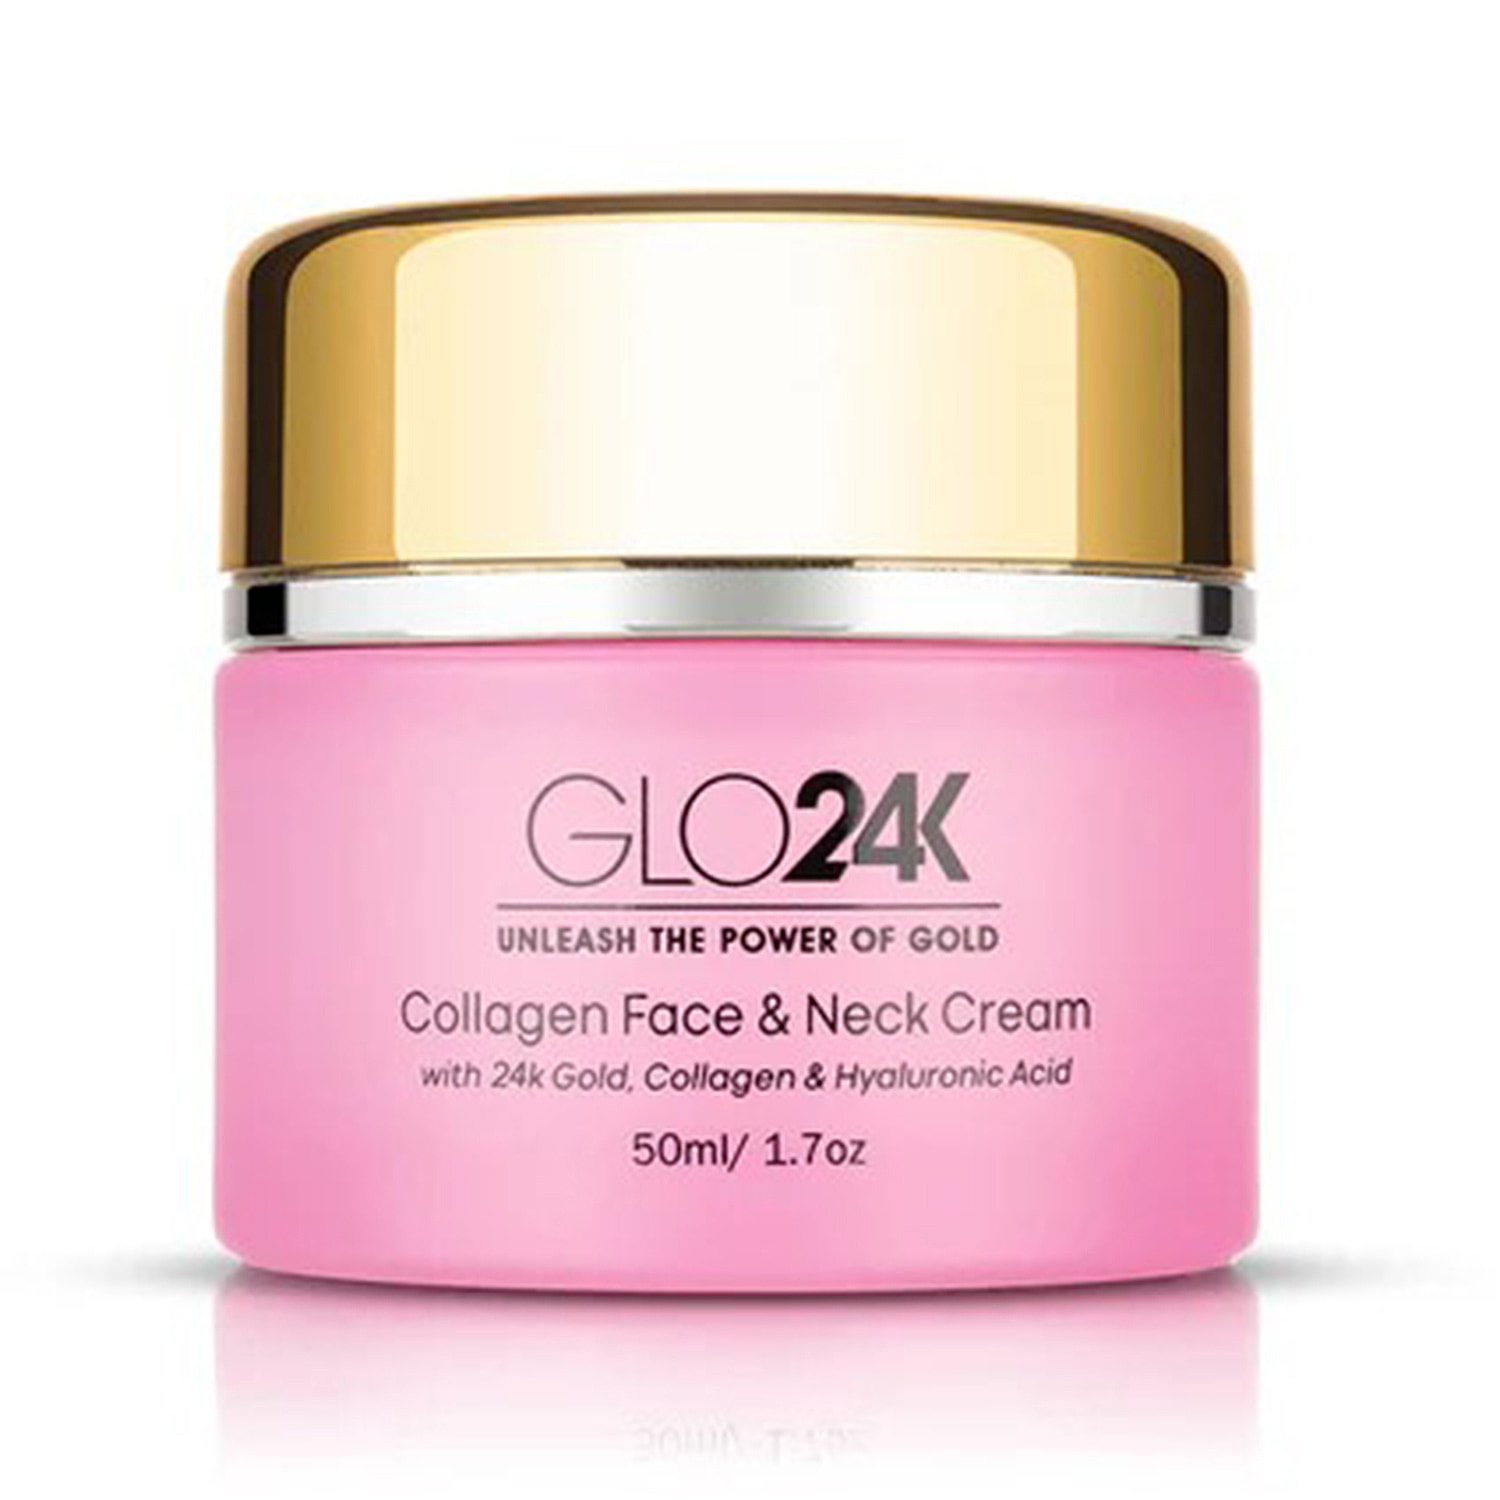 GLO24K Collagen Face & Neck Cream - 50ml With 24k Gold, Collagen & Hyaluronic Acid